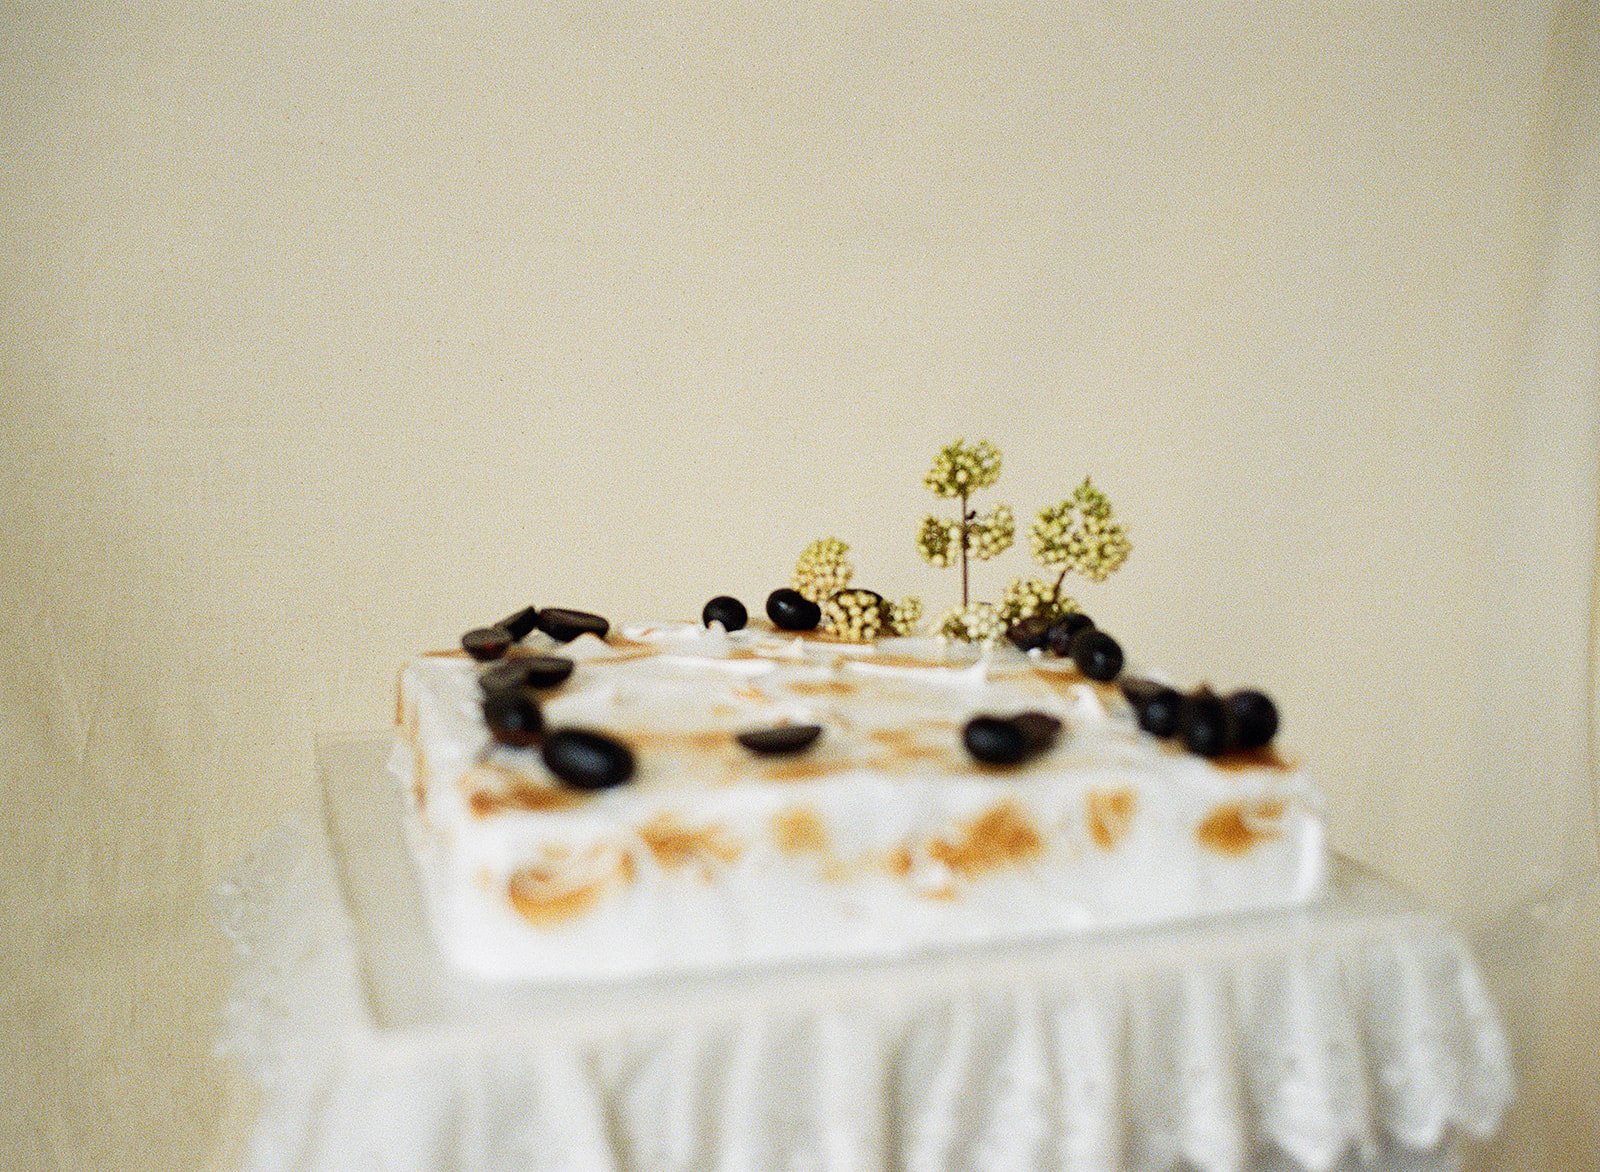 SUSS cake 4.jpg